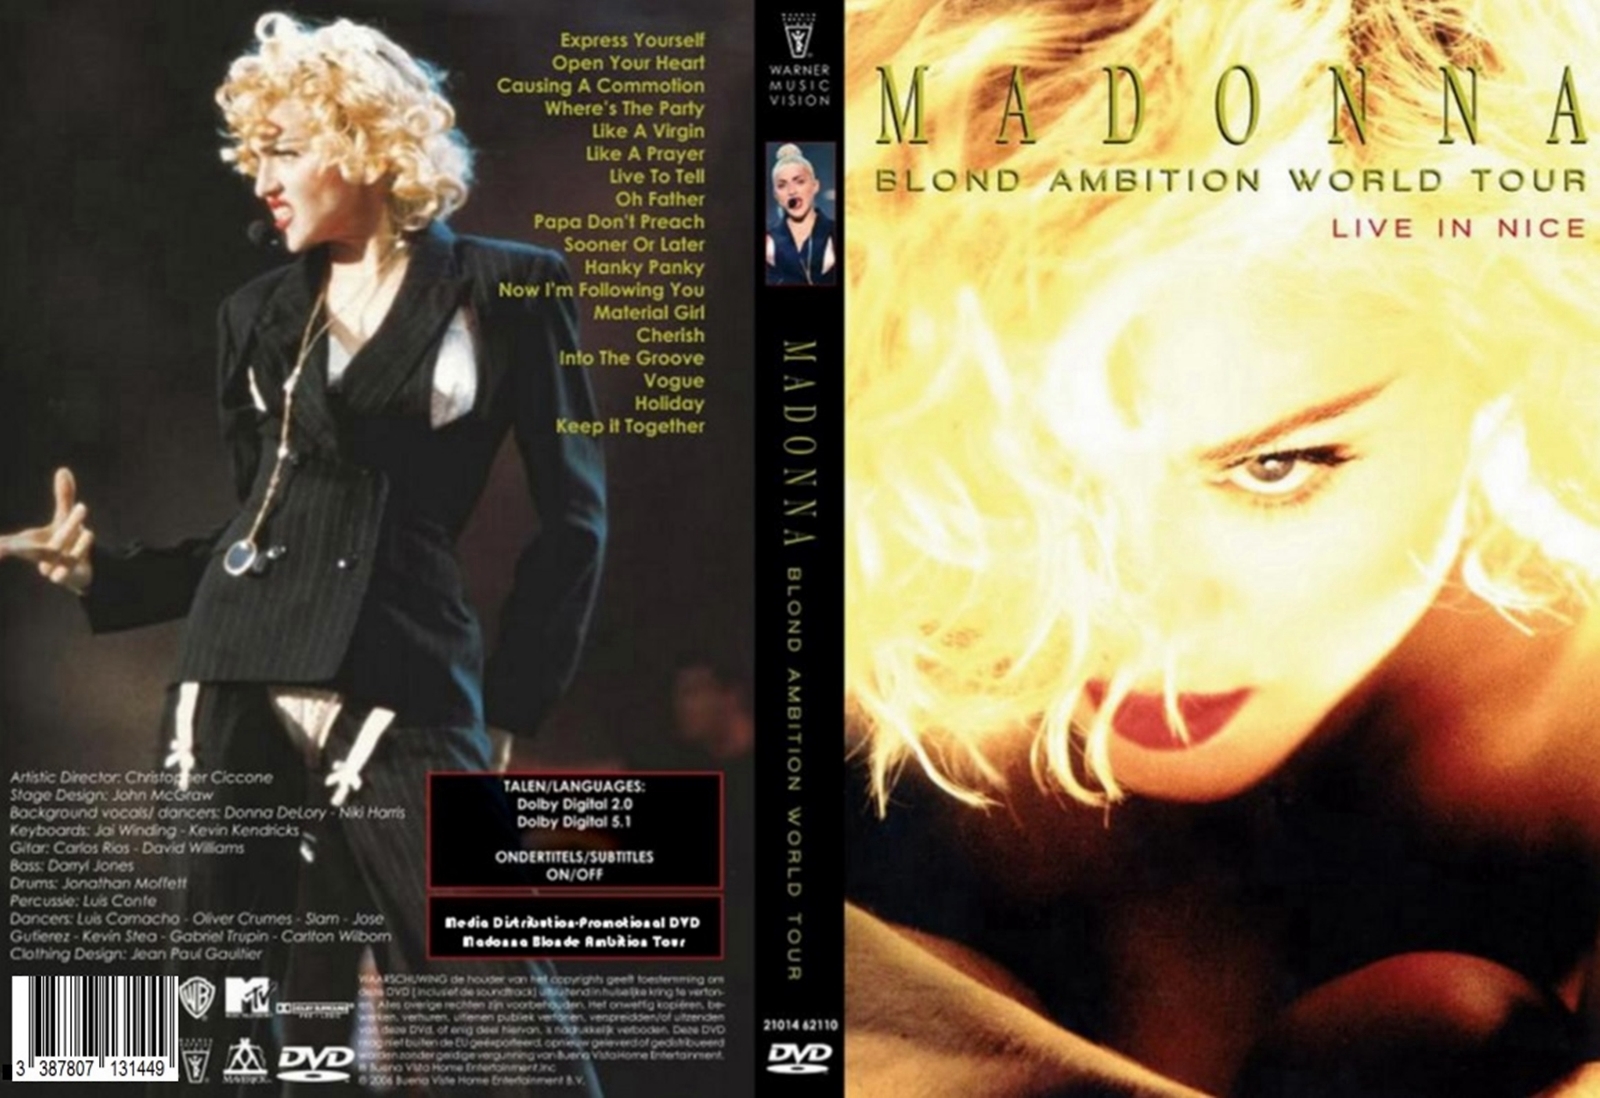 madonna blonde ambition tour dvd